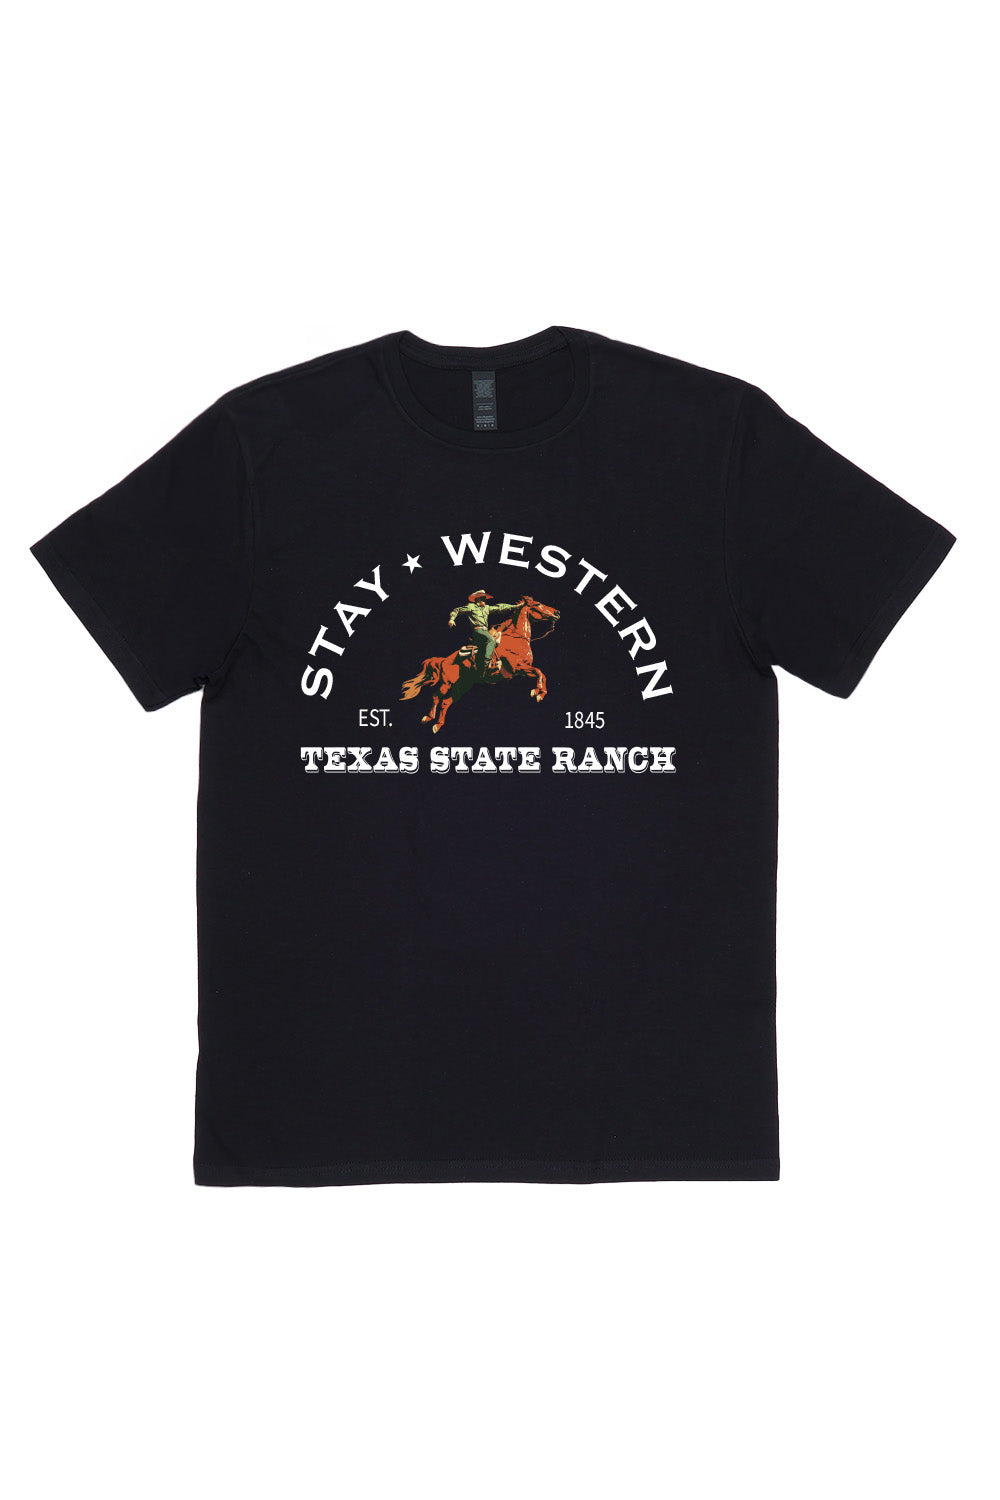 Stay Western T-Shirt in Black (Custom Packs)